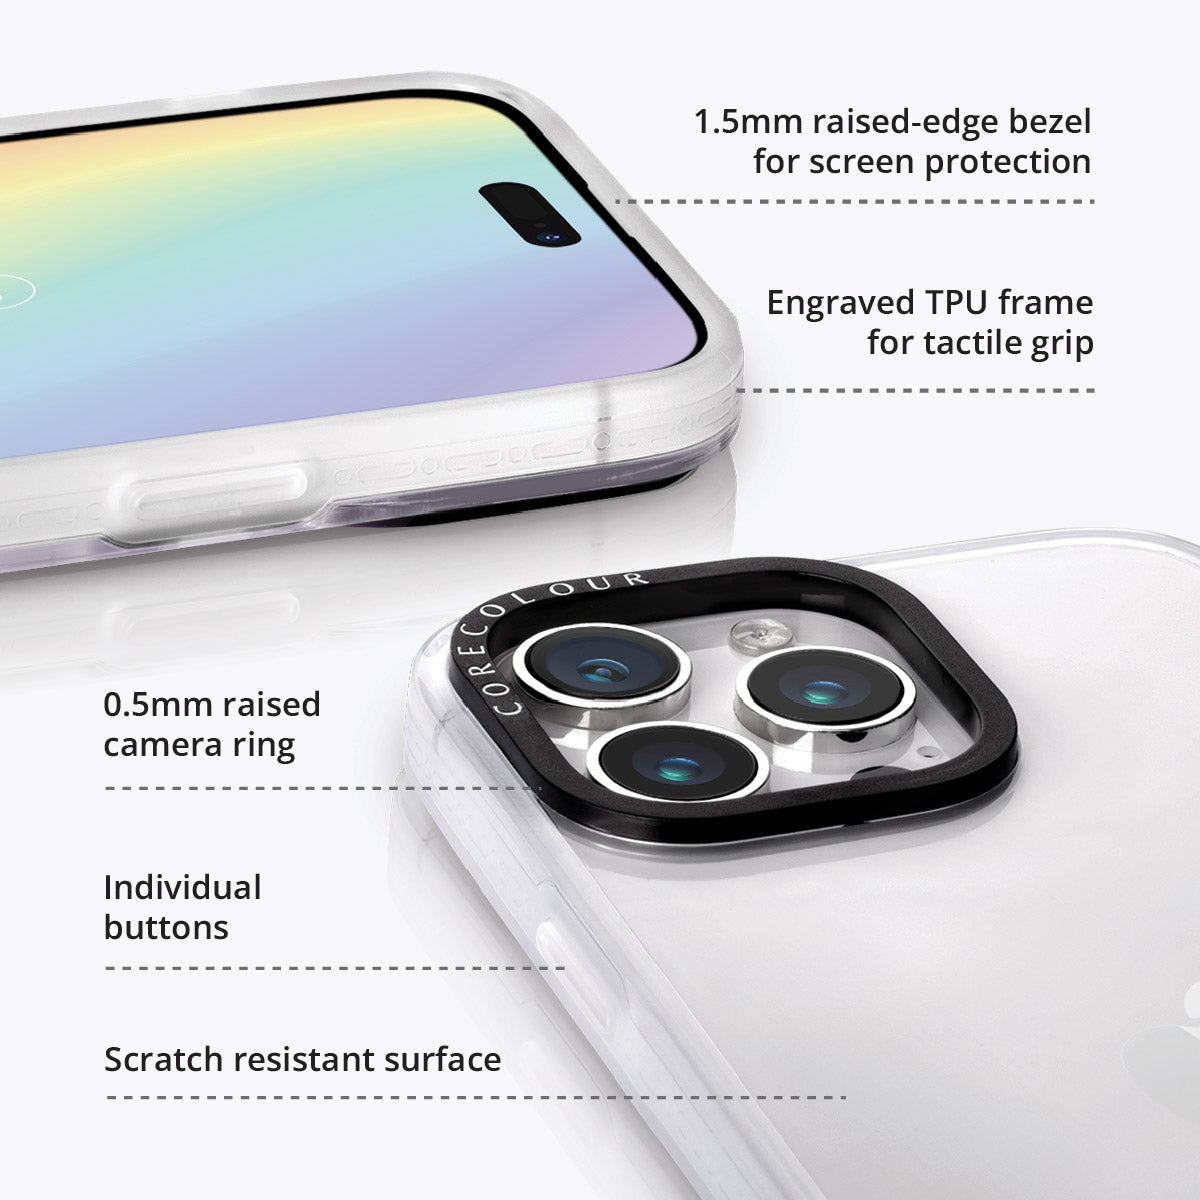 iPhone 13 Cocoa Delight Phone Case MagSafe Compatible - CORECOLOUR